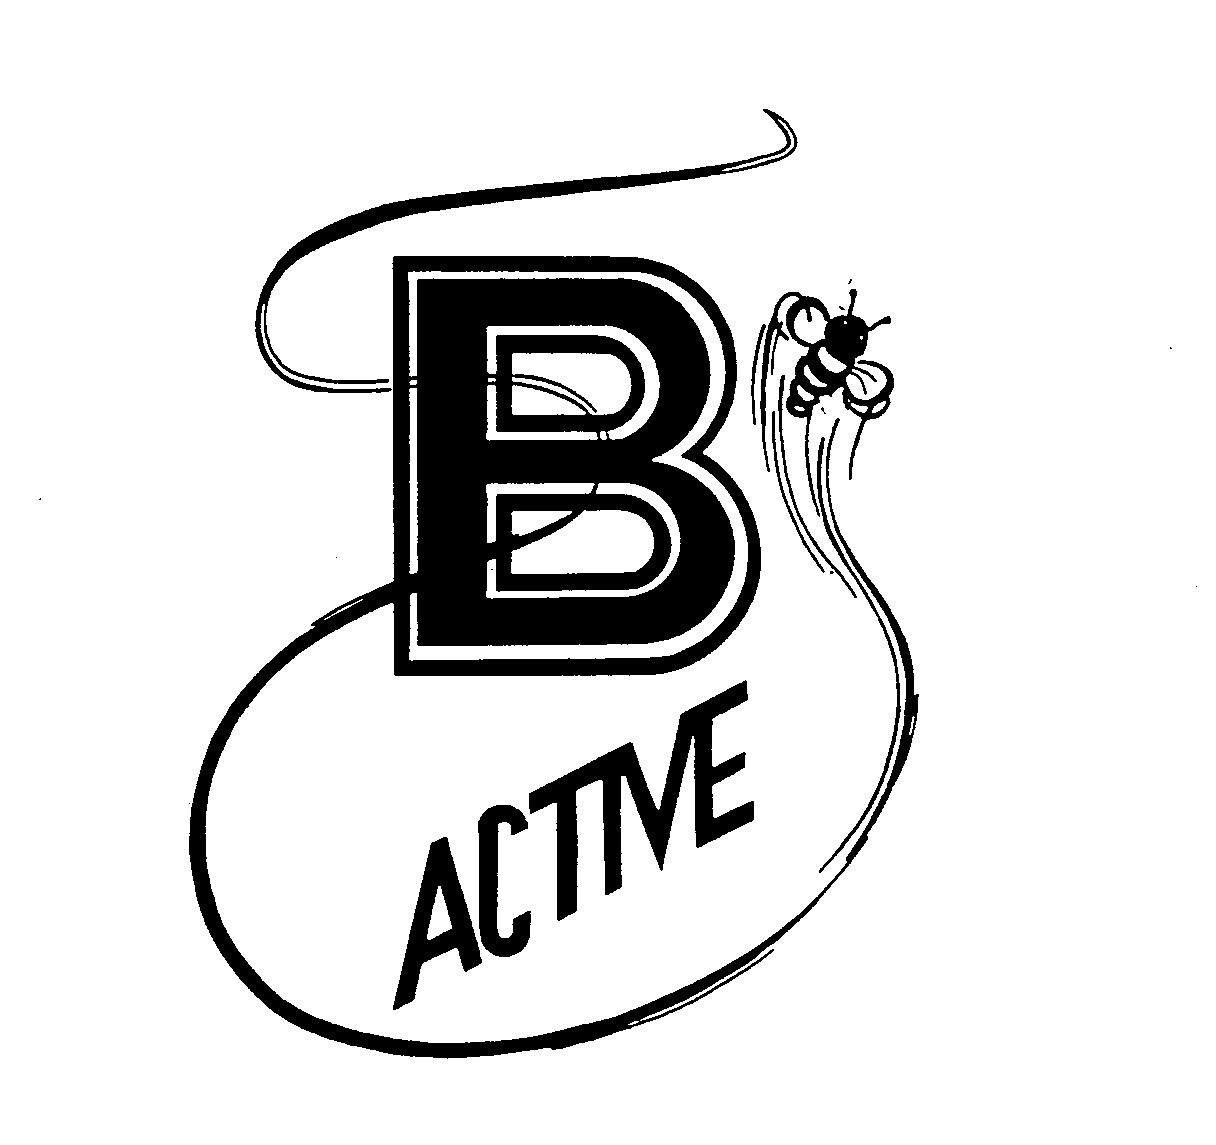 B-ACTIVE